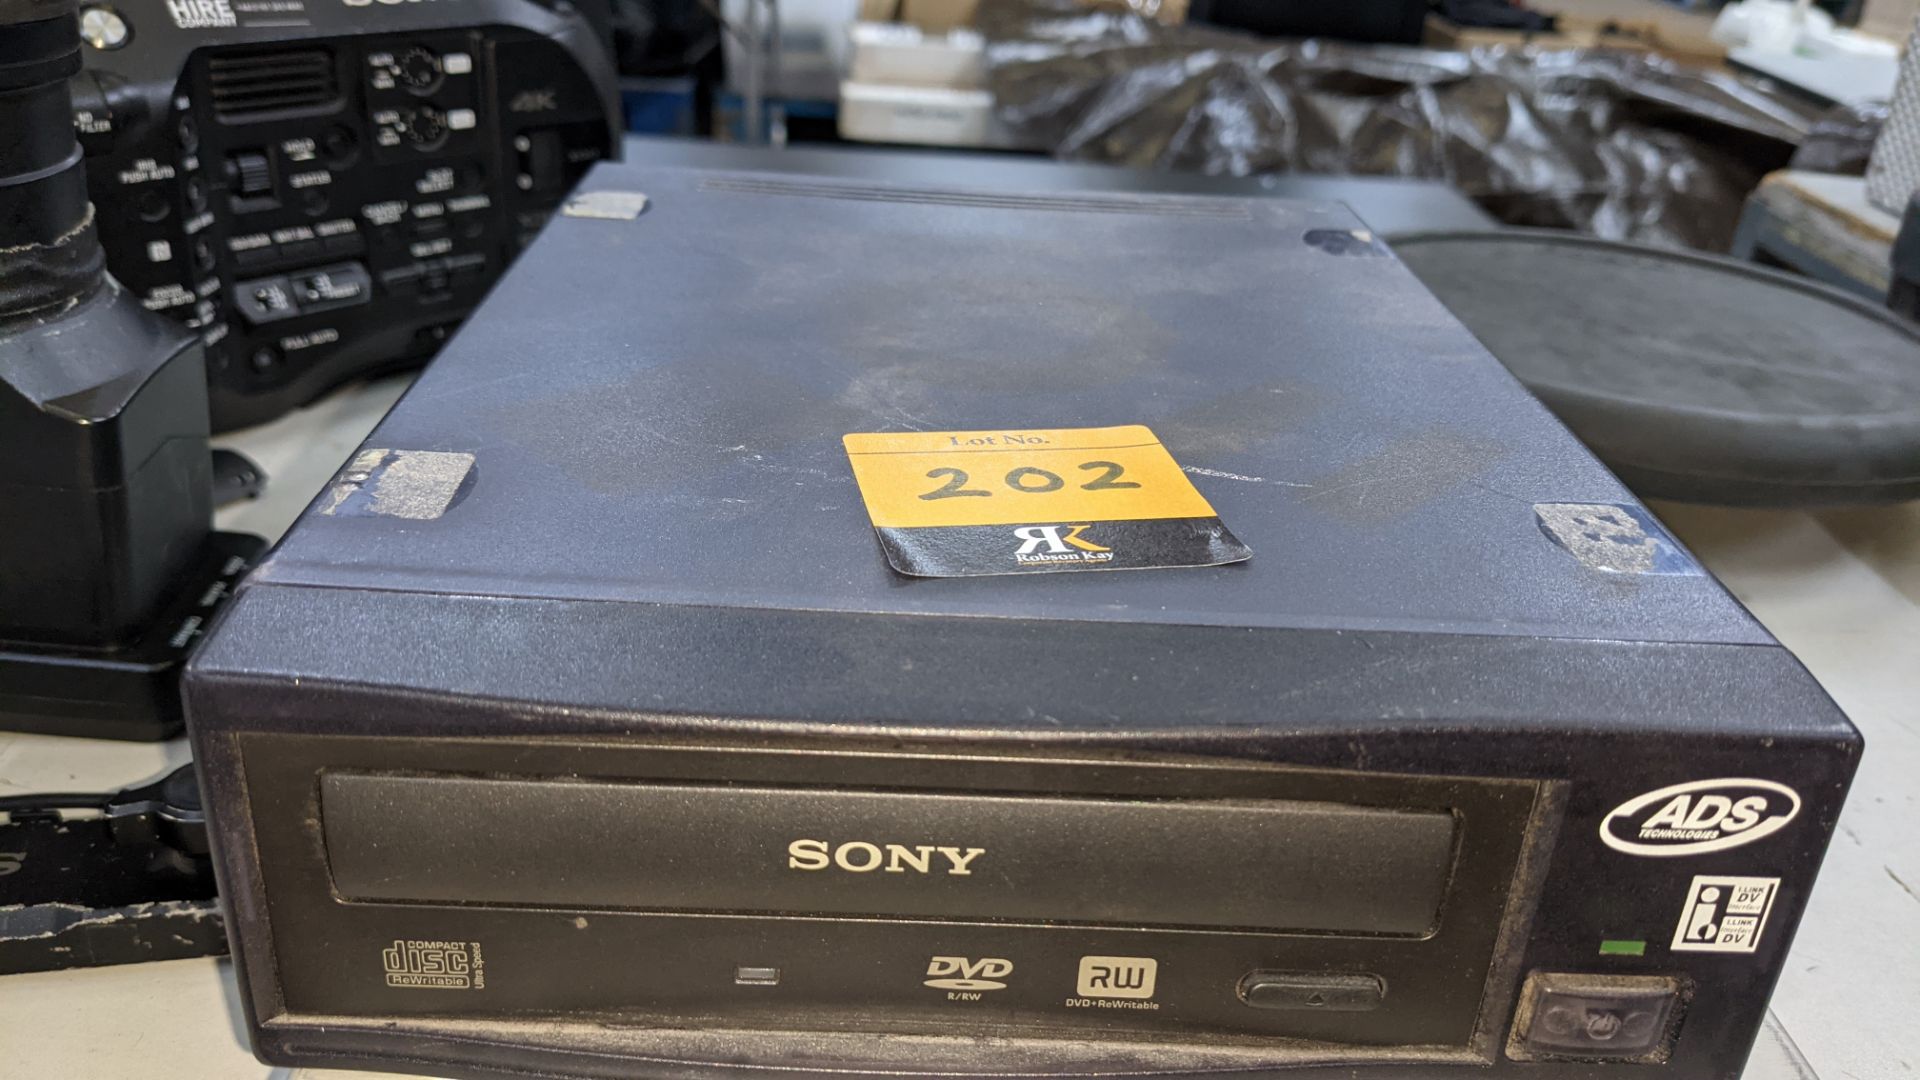 Sony DVD drive plus Eyeheight SDI Video legaliser - Image 4 of 7